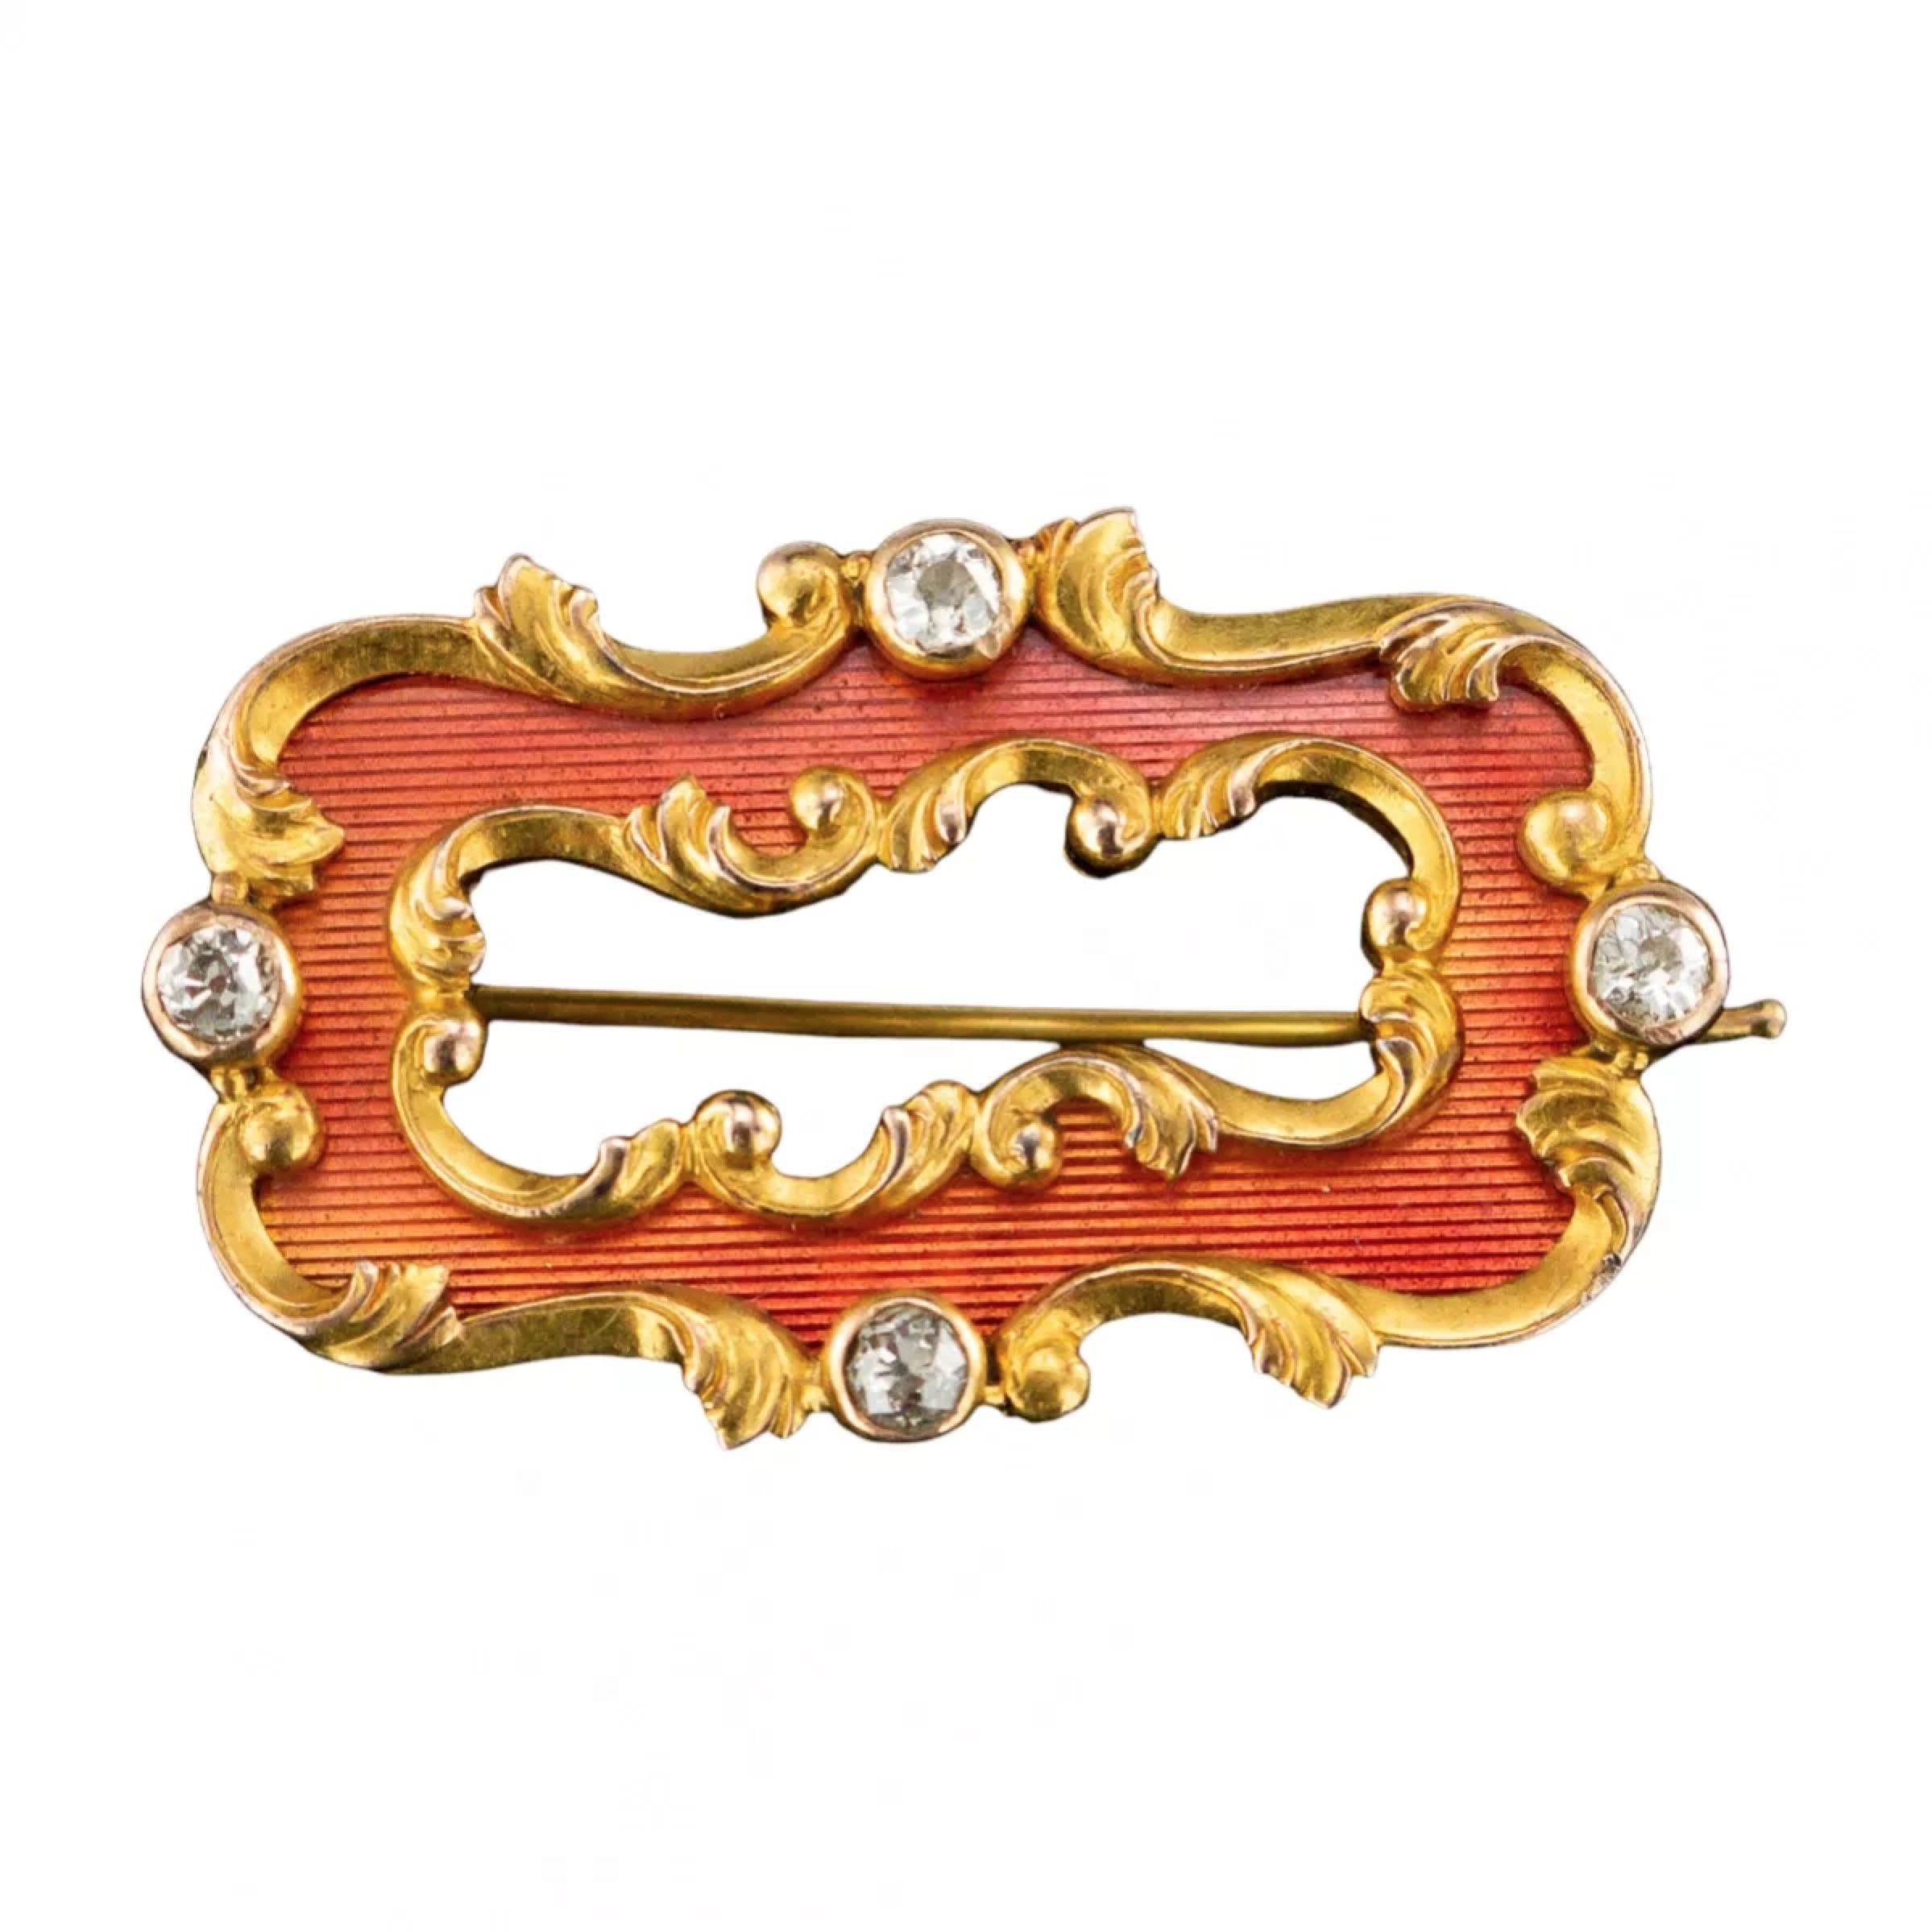 Guilloché-enamel-gold-brooch-with-diamonds-Oscar-Peel-for-Faberge-